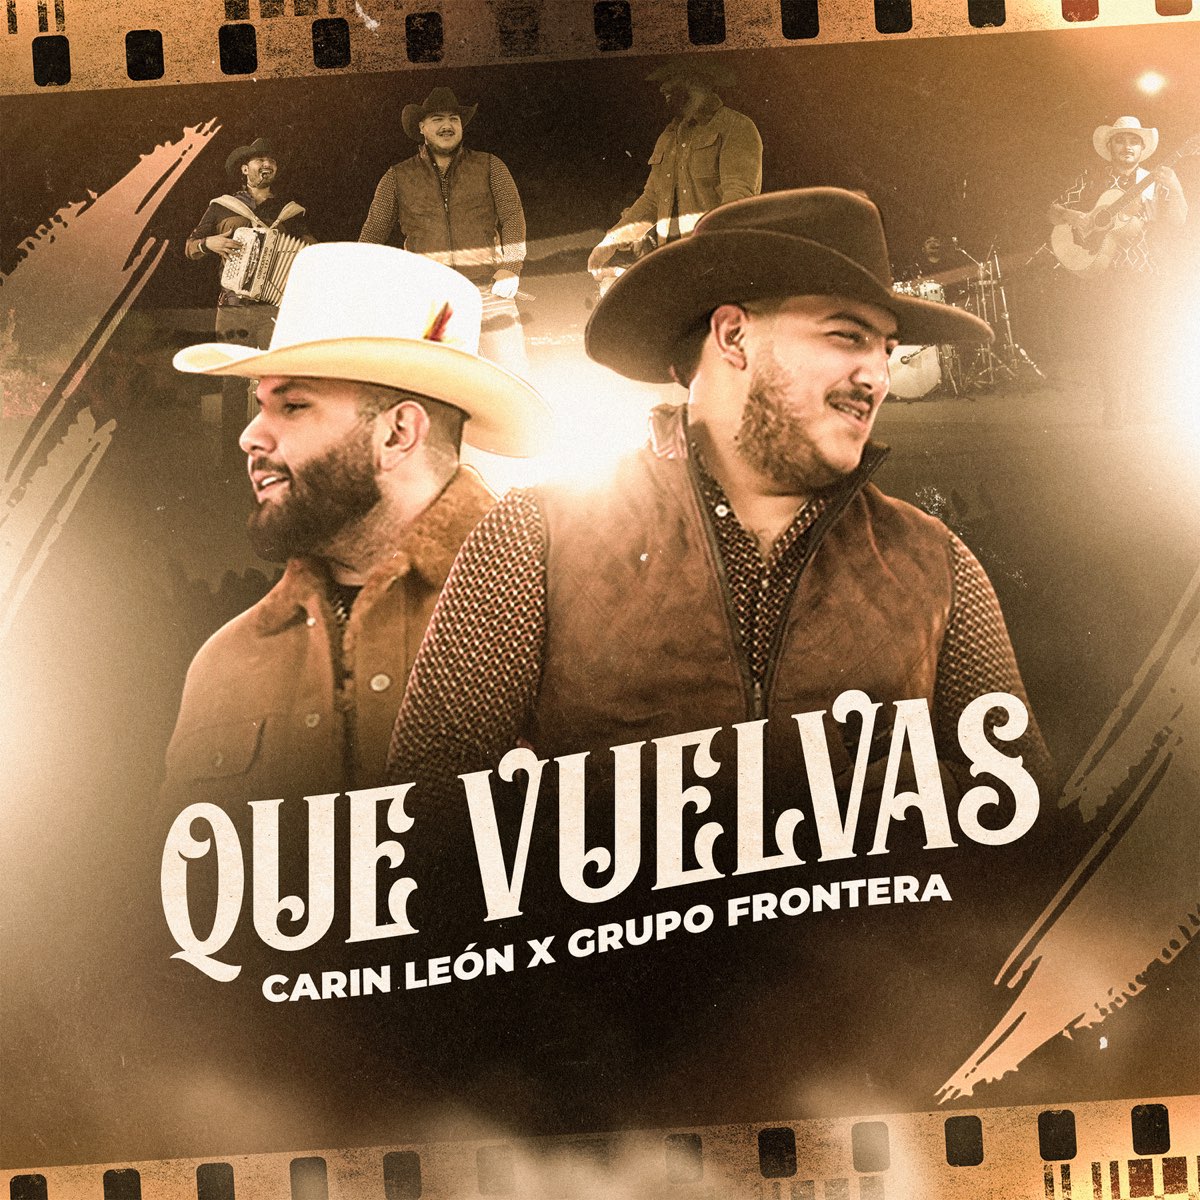 Que Vuelvas - Single by Carin Leon & Grupo Frontera.